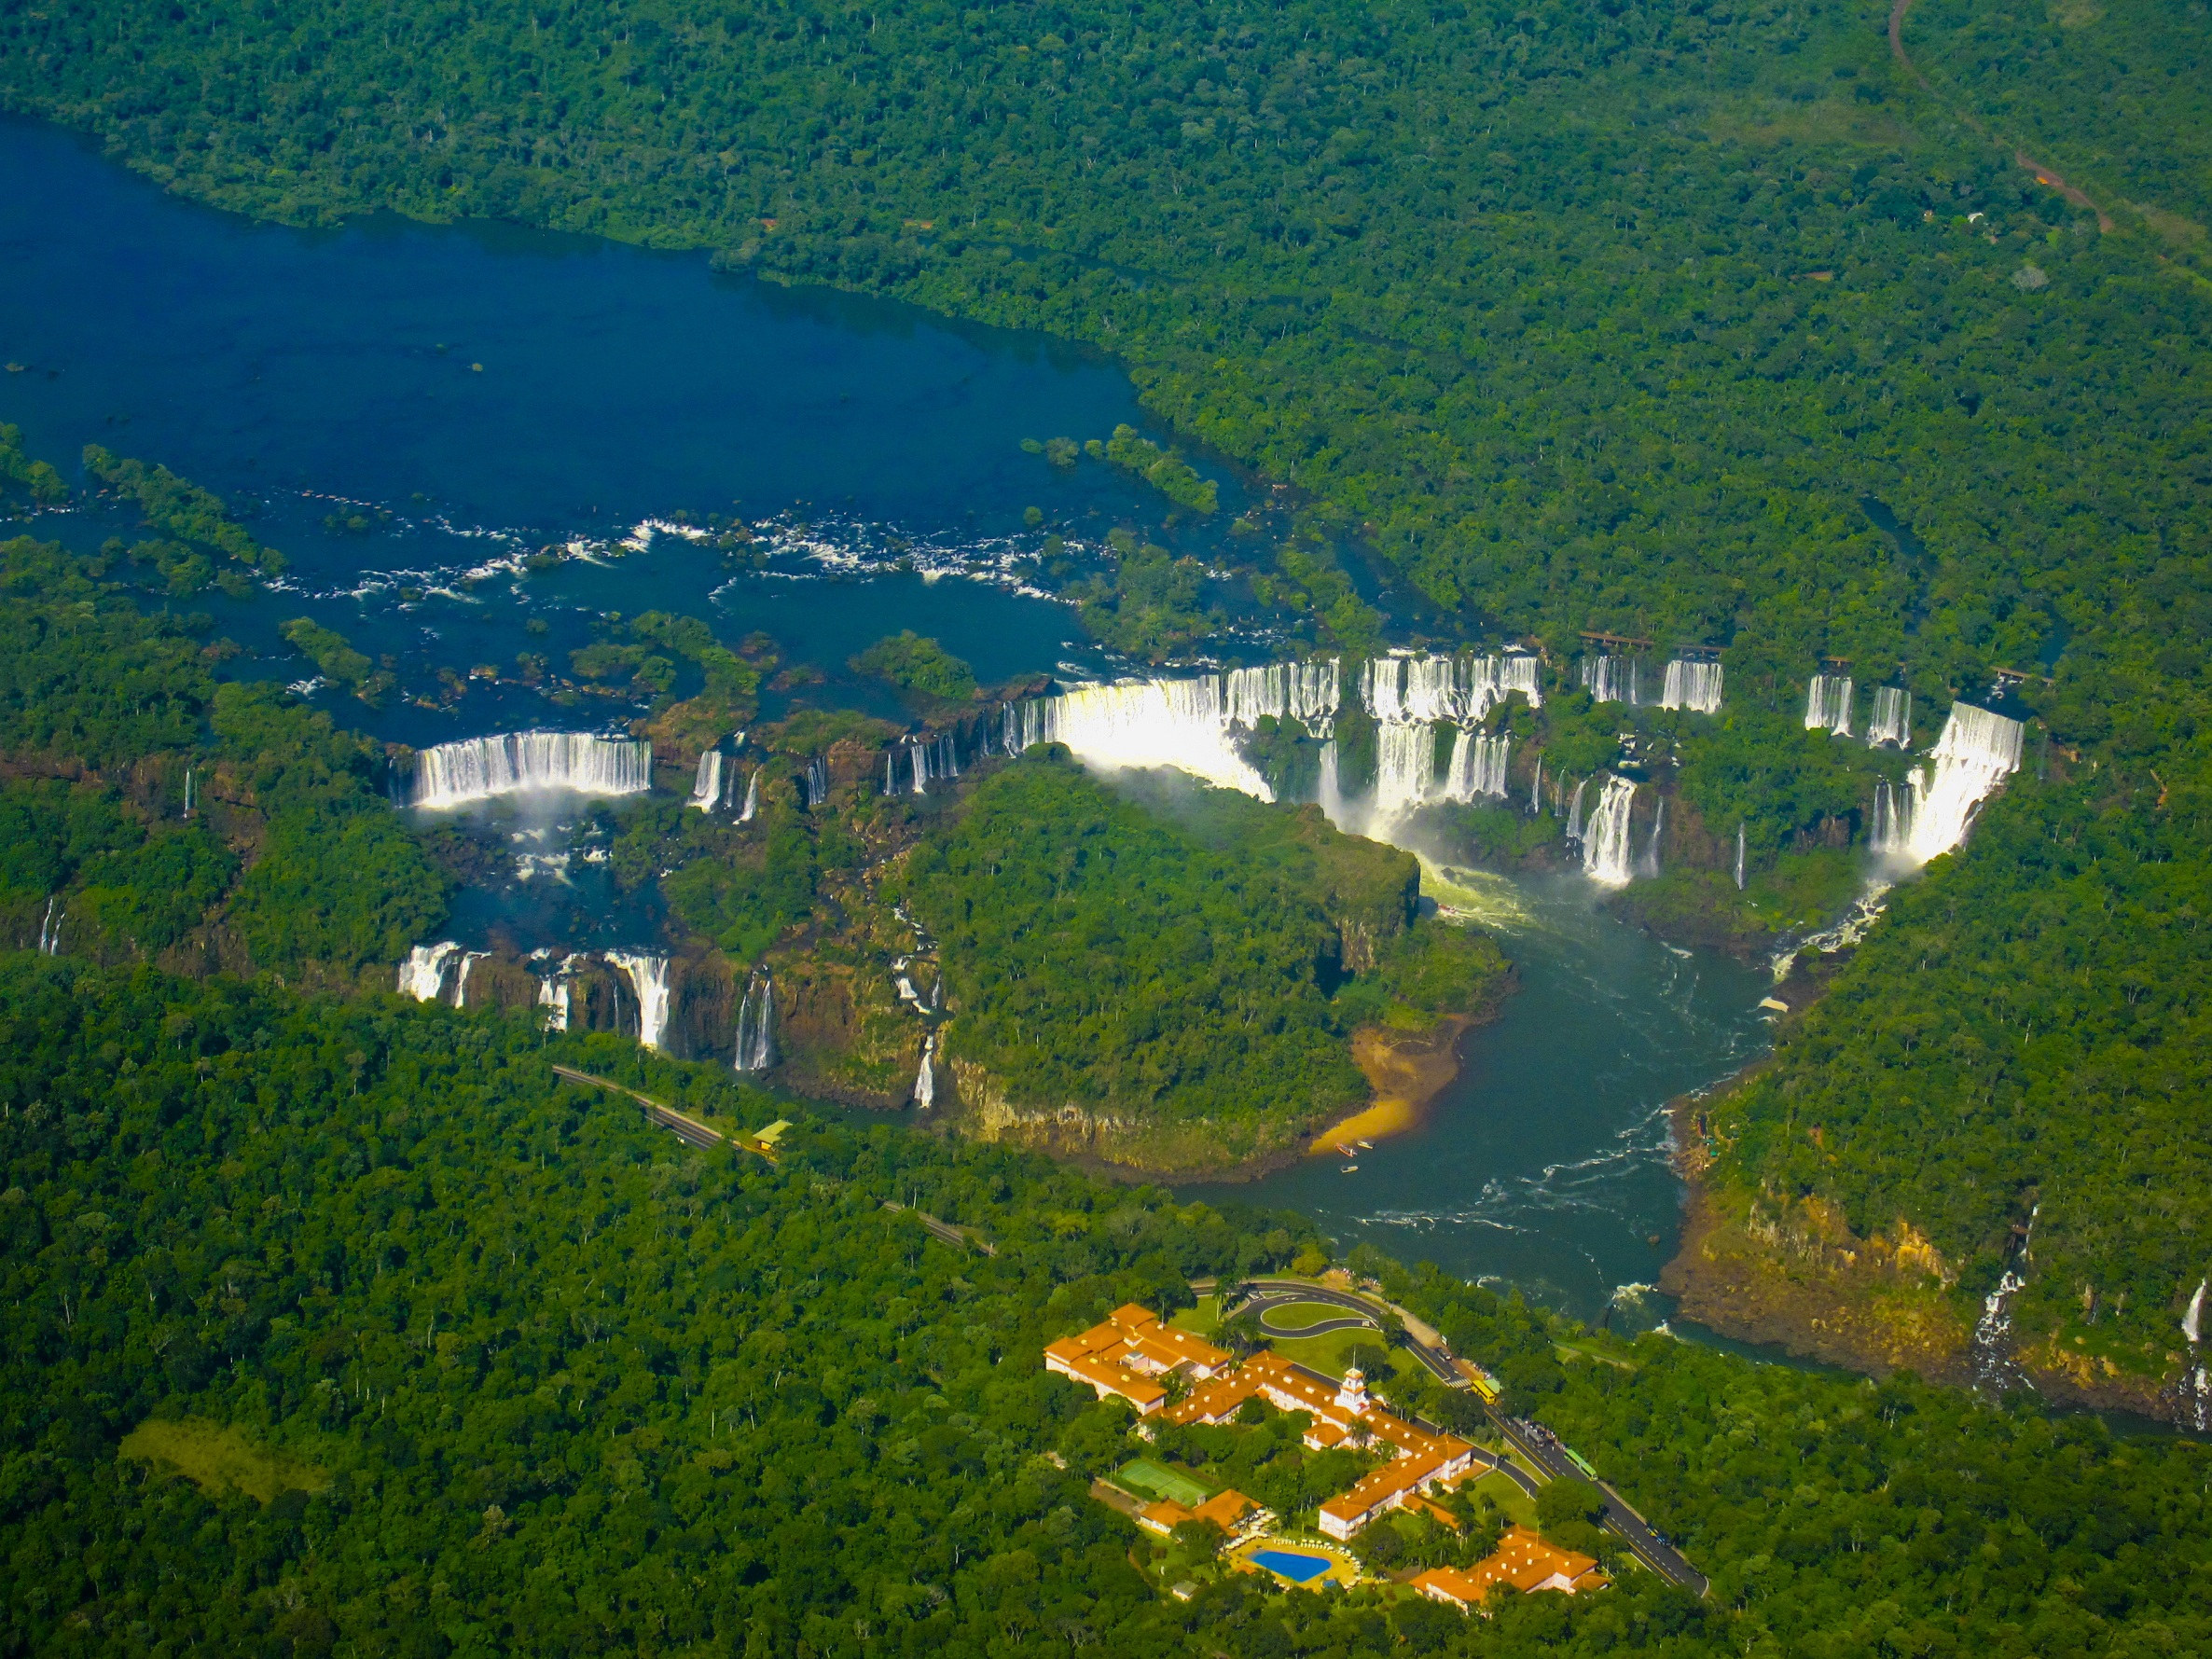 Природные объекты бразилии. Река Игуасу Бразилия. Река Игуасу Аргентина. Парана водопад Игуасу. Игуасу (национальный парк, Бразилия).